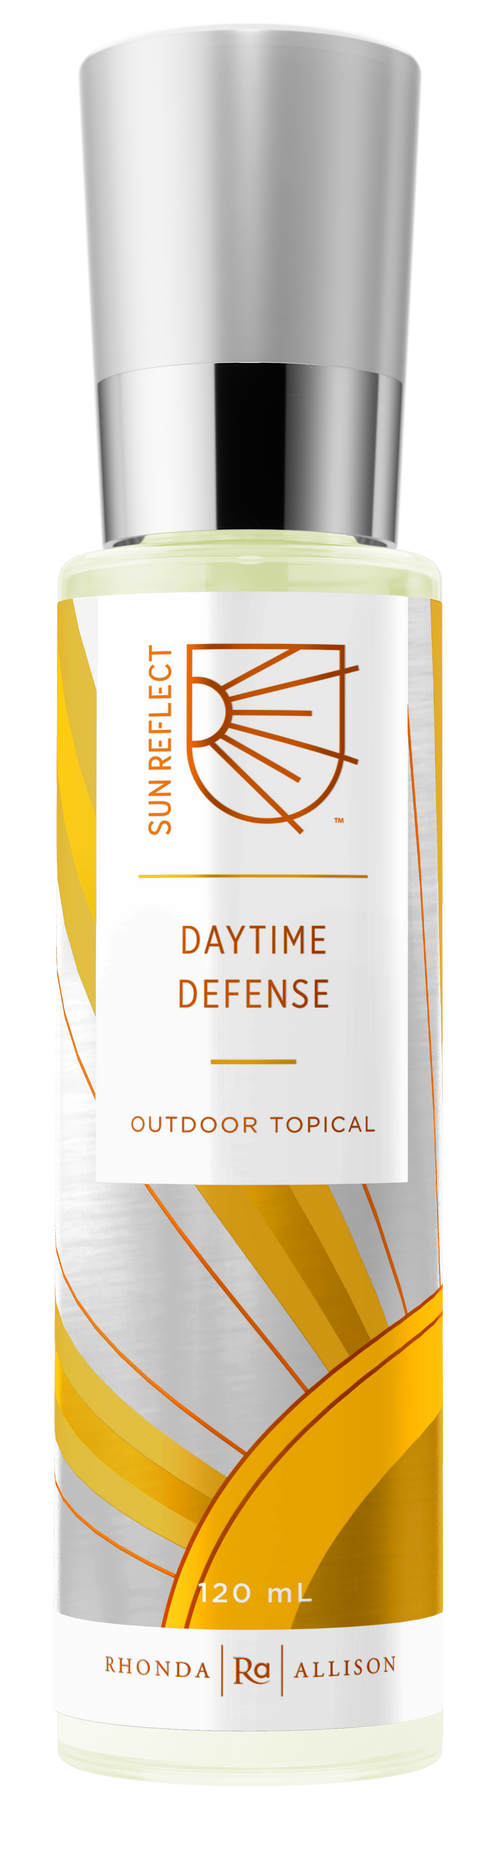 Daytime Defense